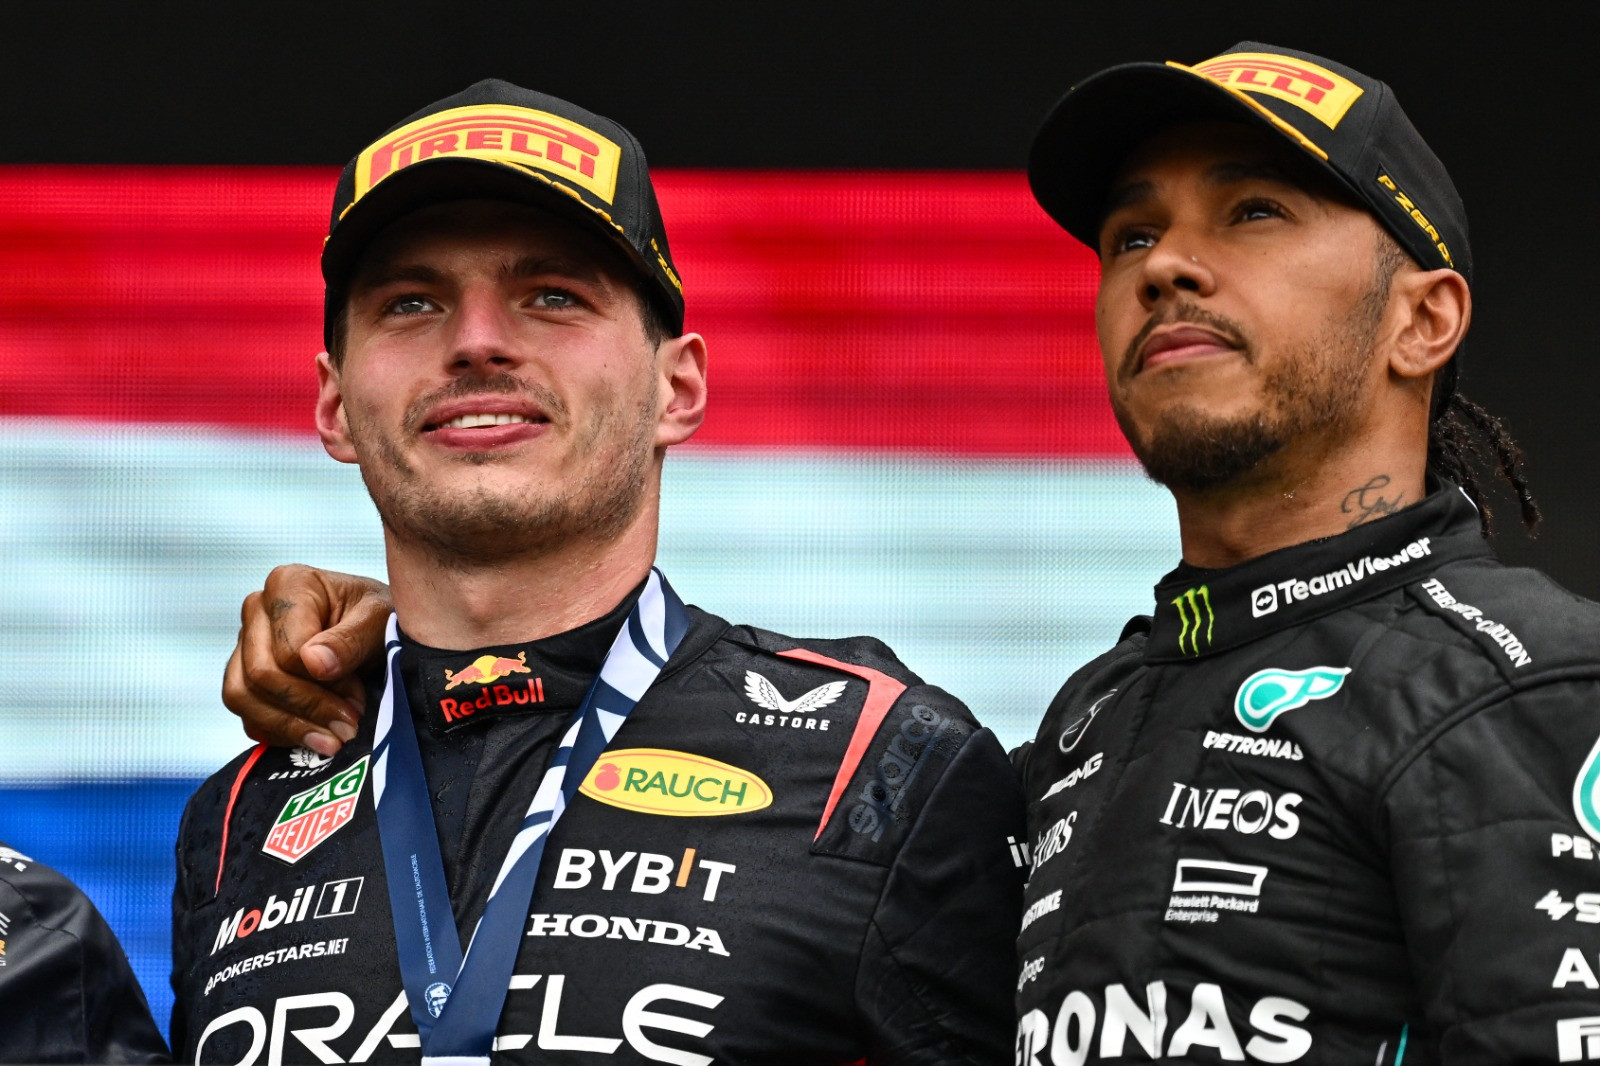 Hamilton, Verstappen set for epic Brazil contest again | The Express Tribune